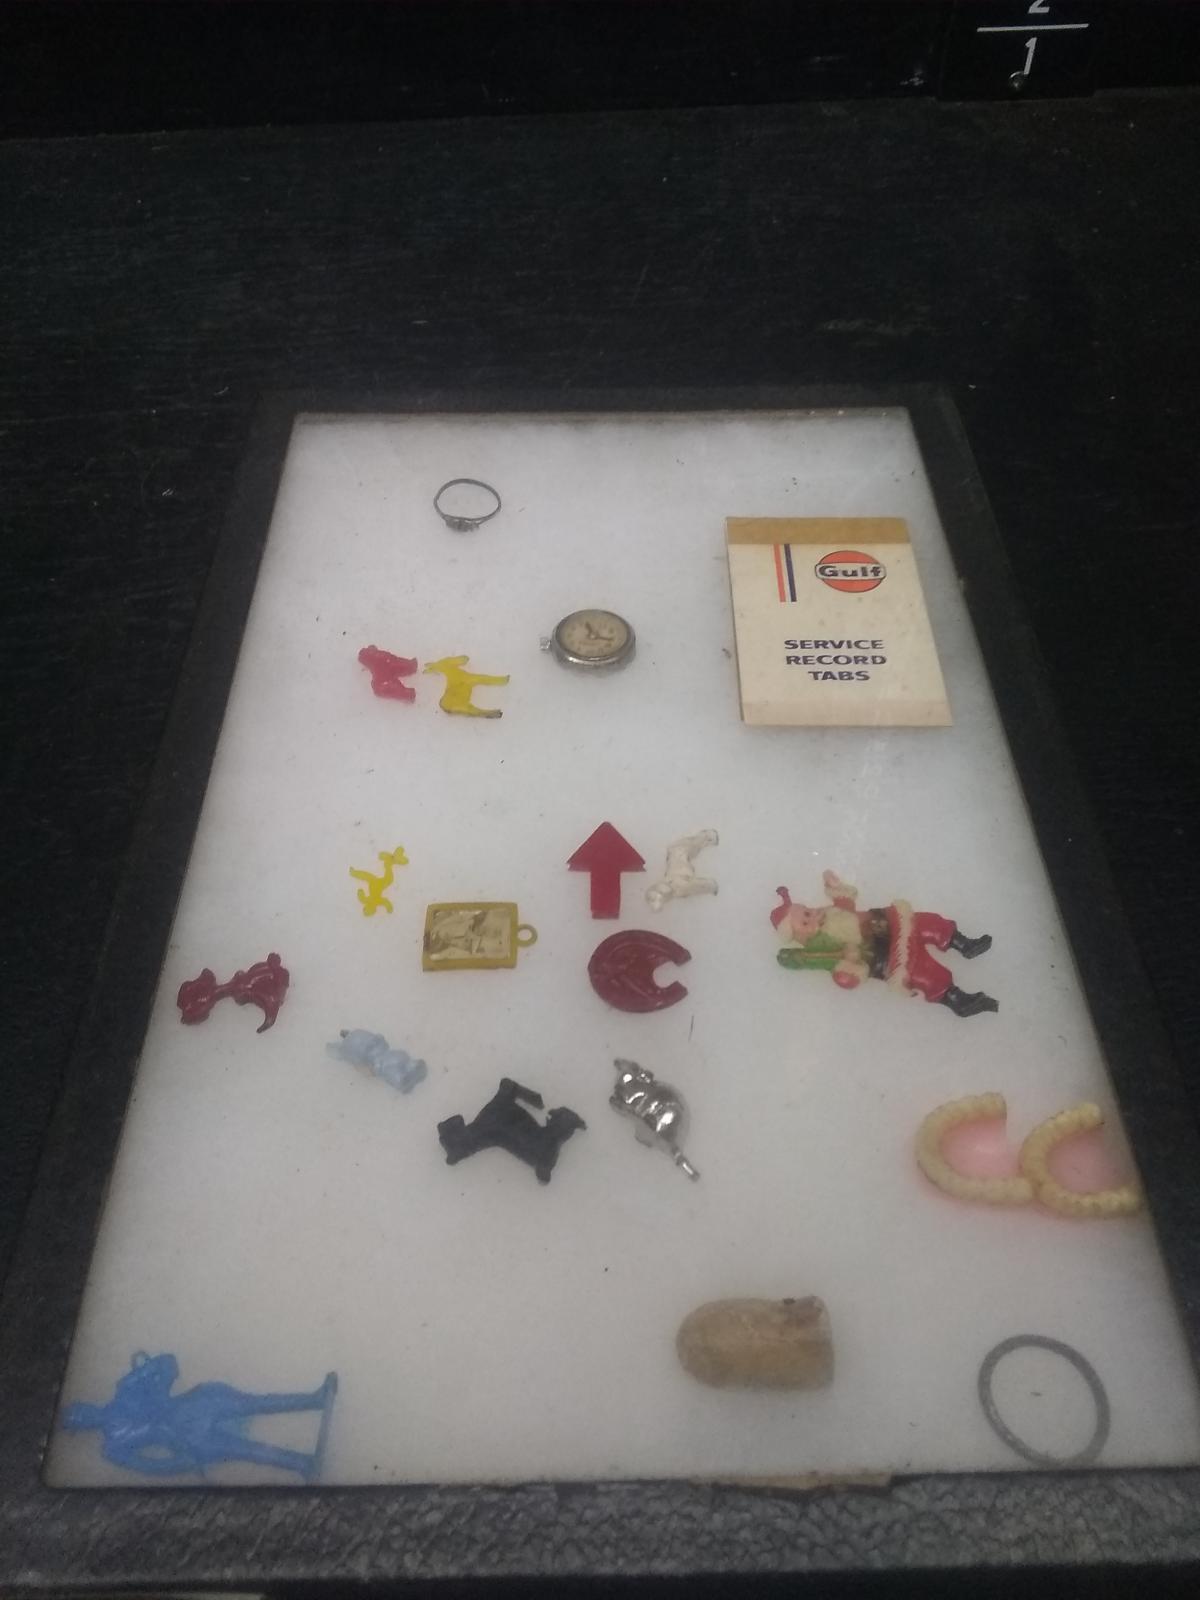 Glass Top Collectors Box-Novelty Toys, Miniature Compass, False Teeth